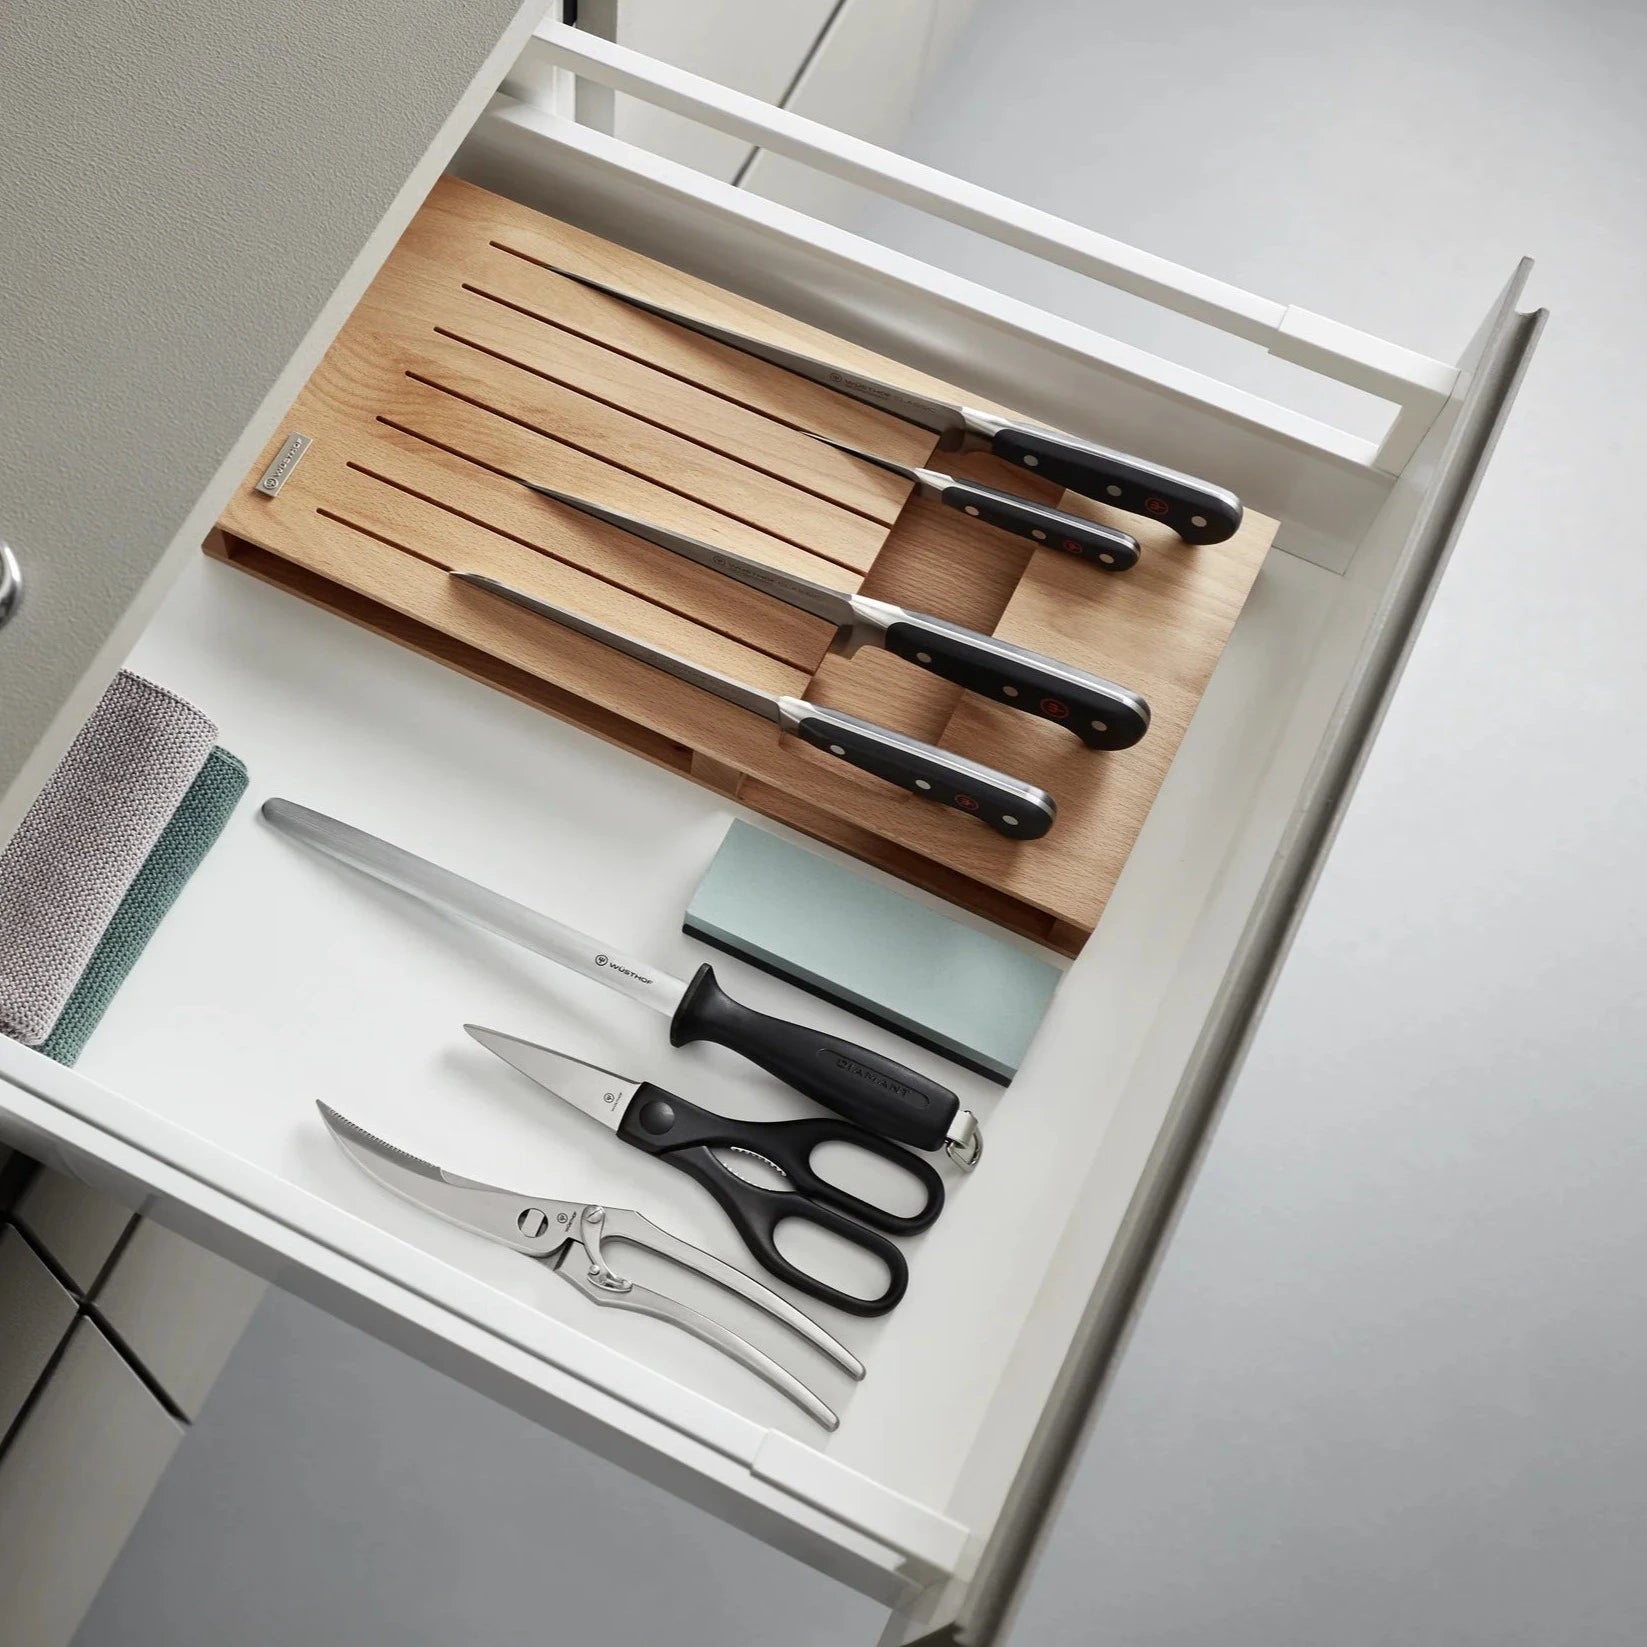 Wusthof Knife Organiser In-drawer 7 Slots